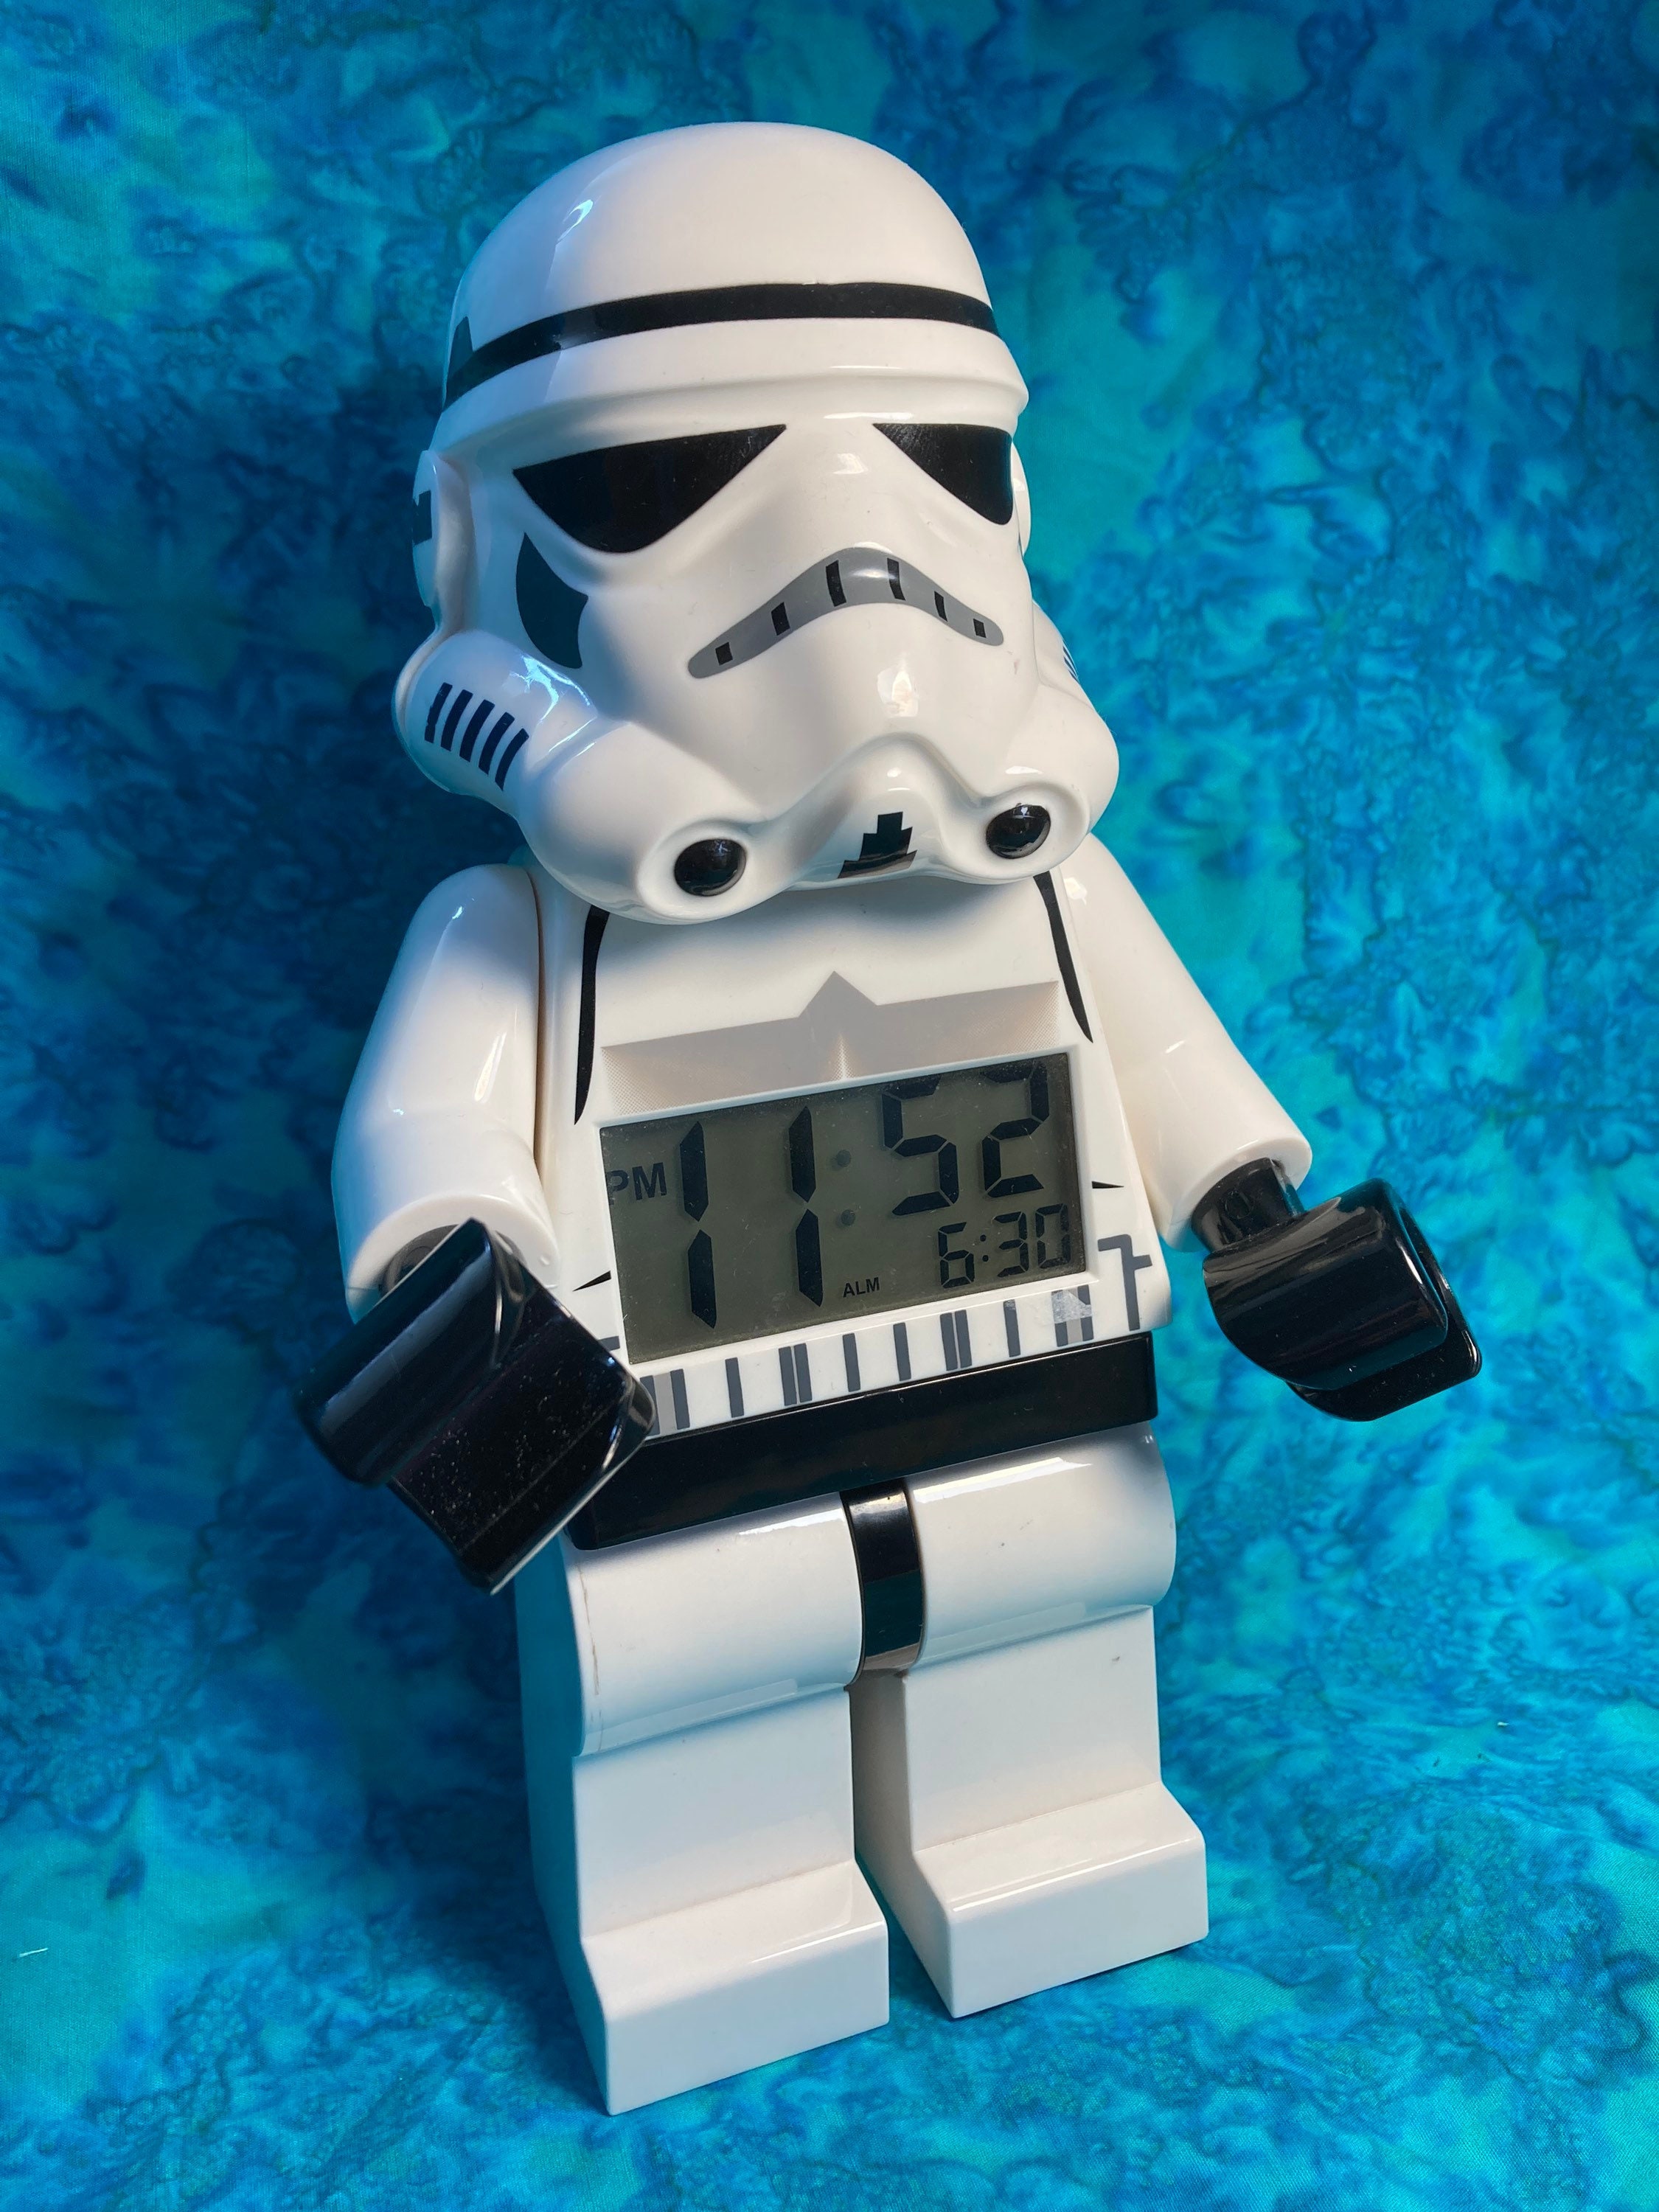 Collectors Item Star Wars Lego Trooper Alarm Clock in - Etsy